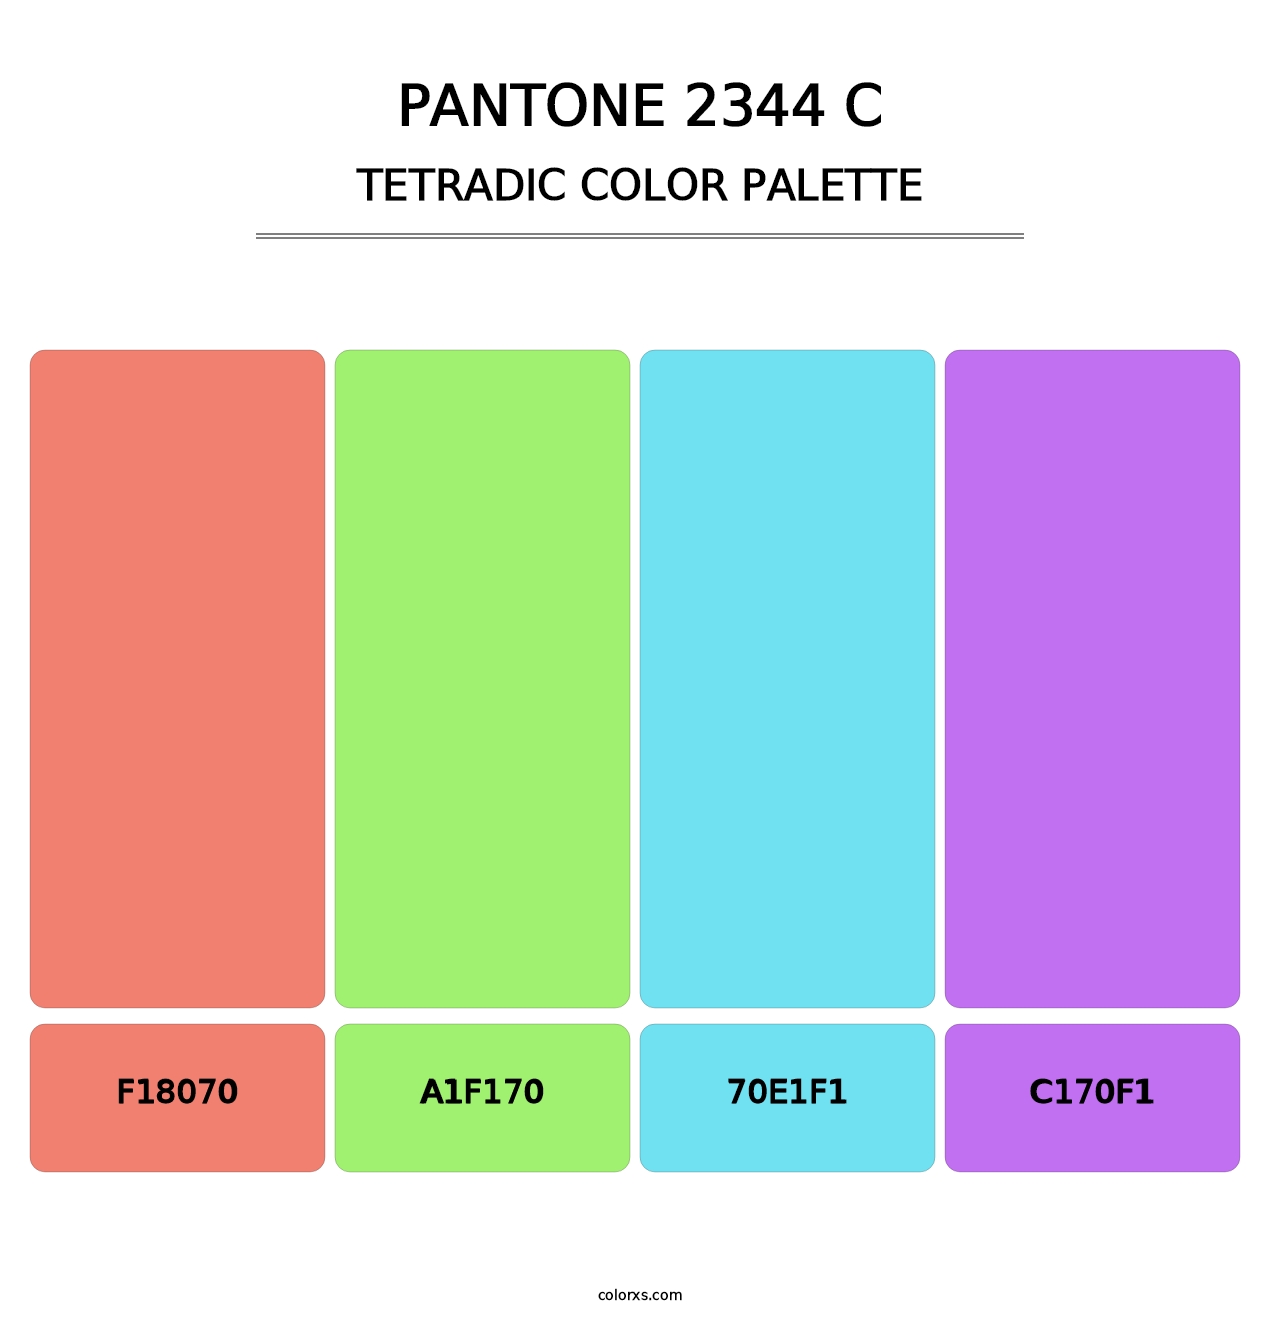 PANTONE 2344 C - Tetradic Color Palette